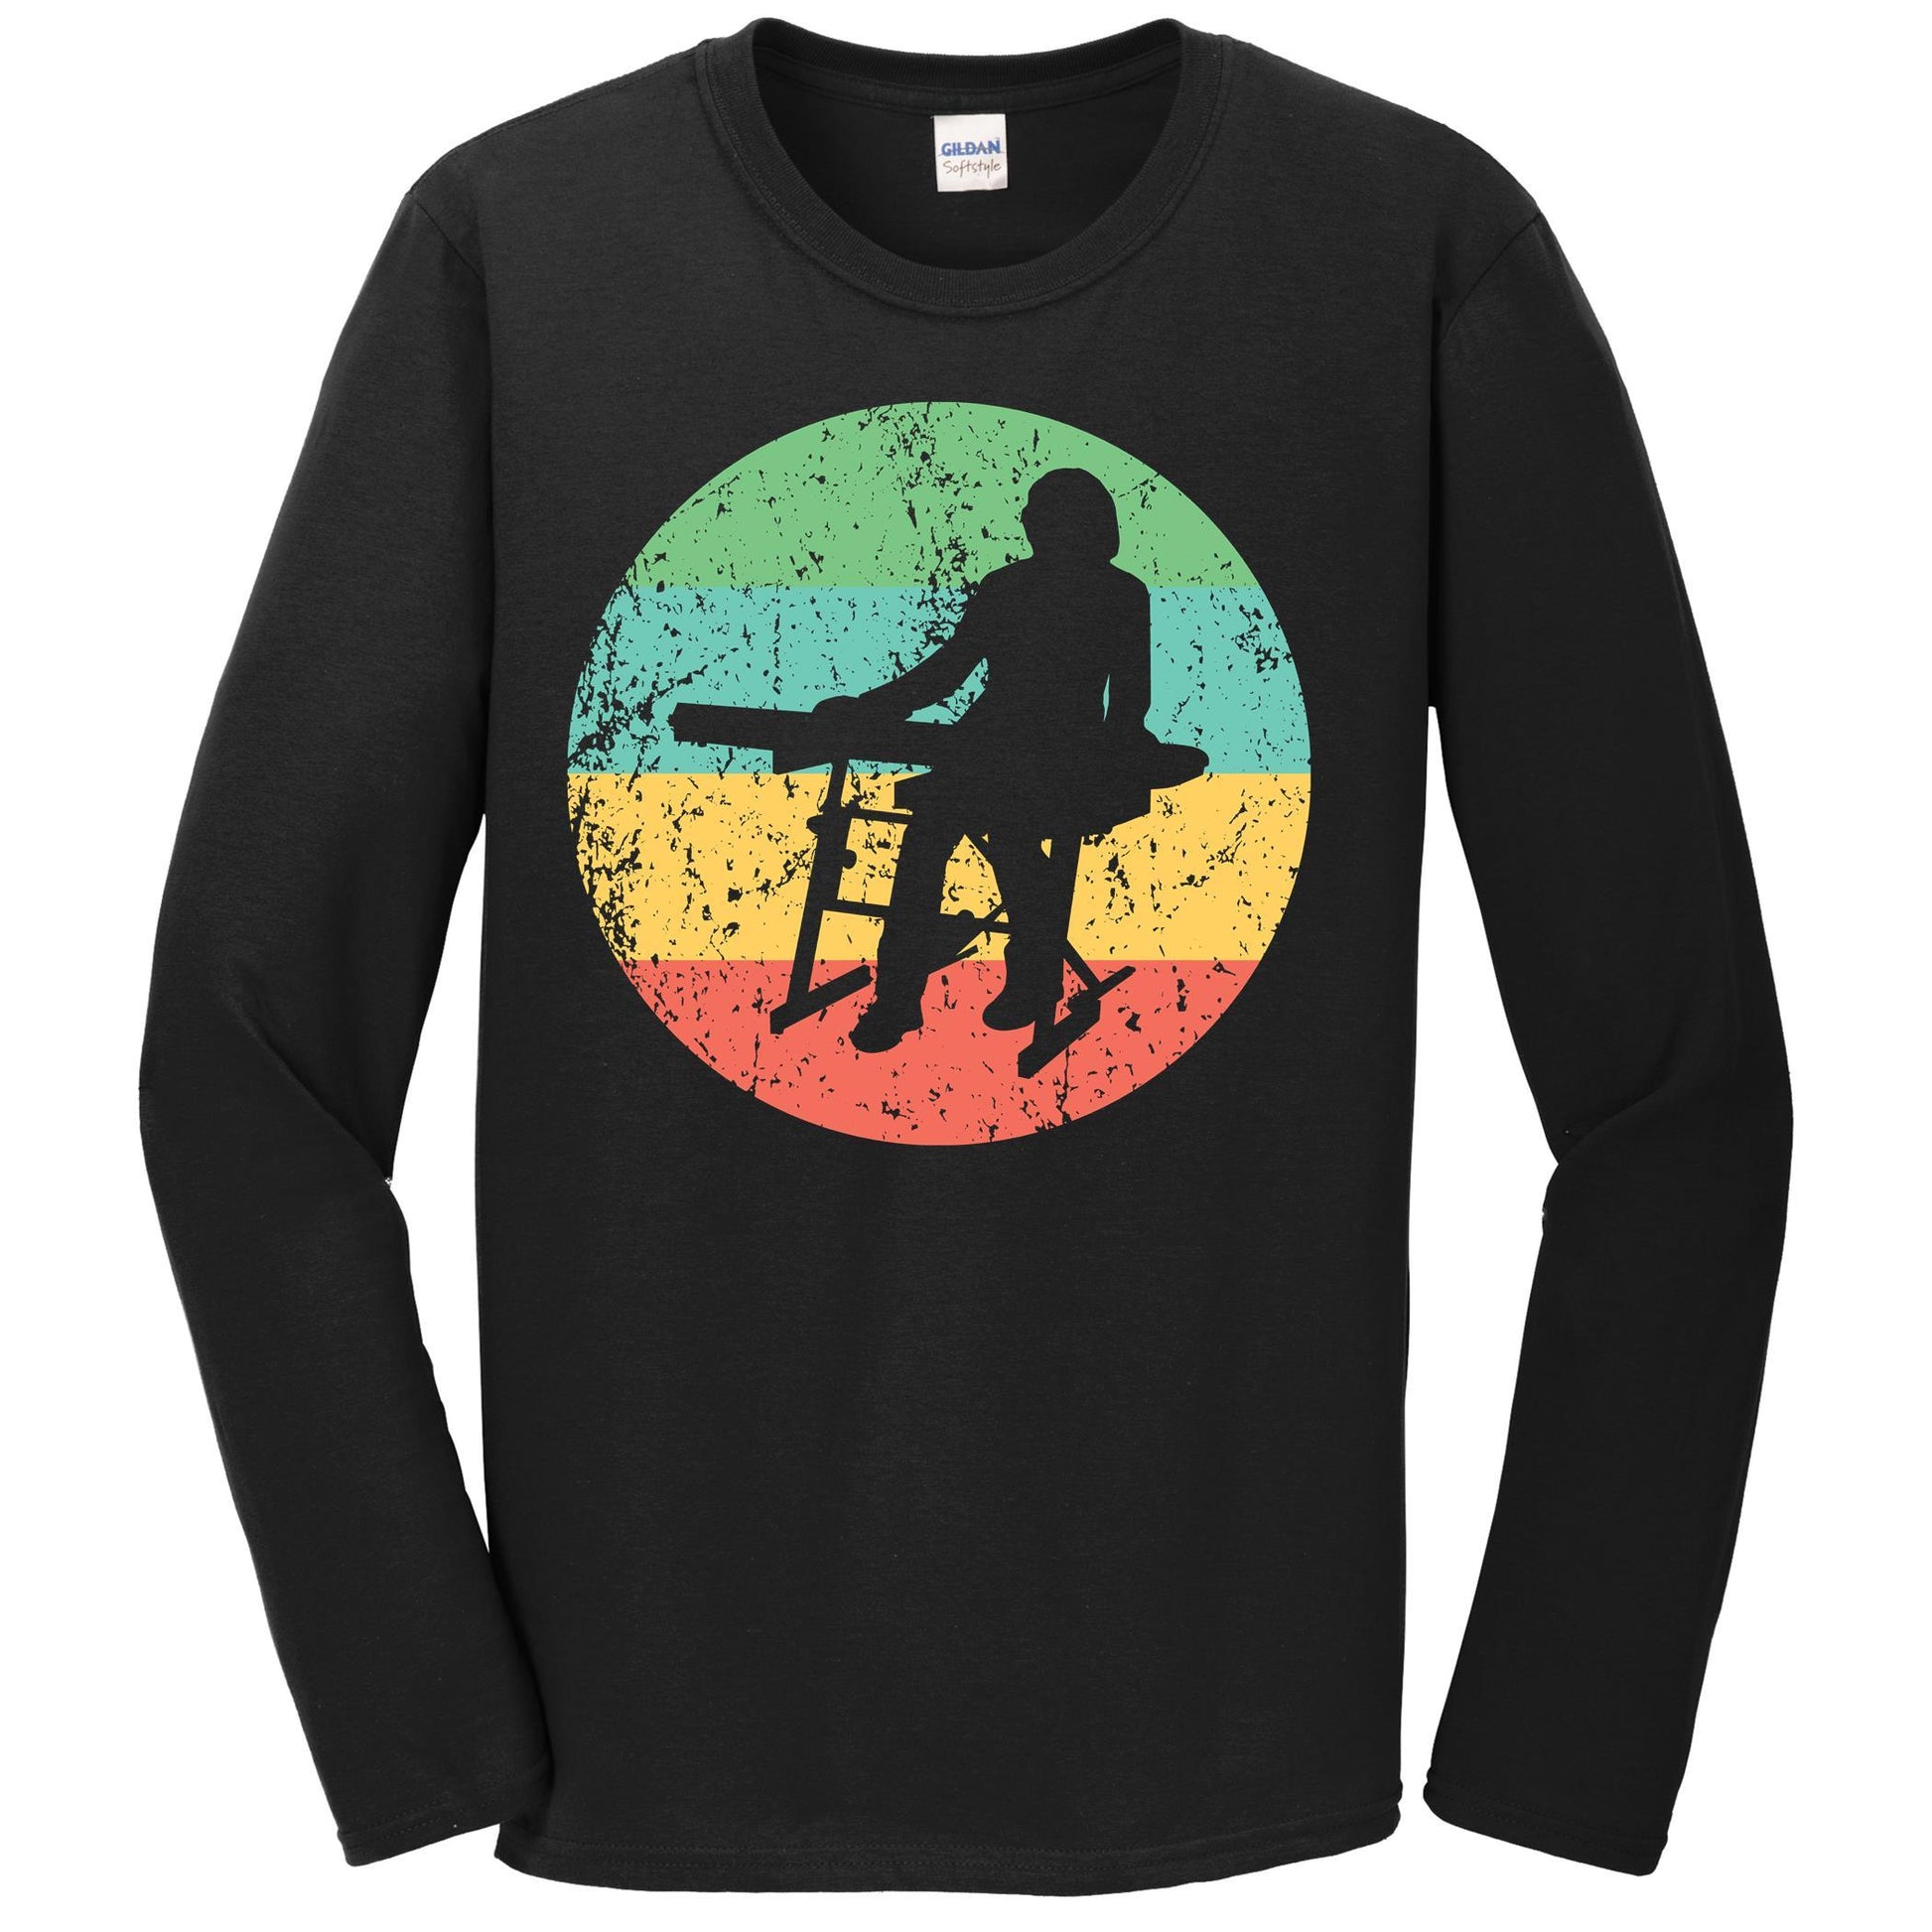 Keyboard Long Sleeve Shirt - Vintage Retro Music T-Shirt